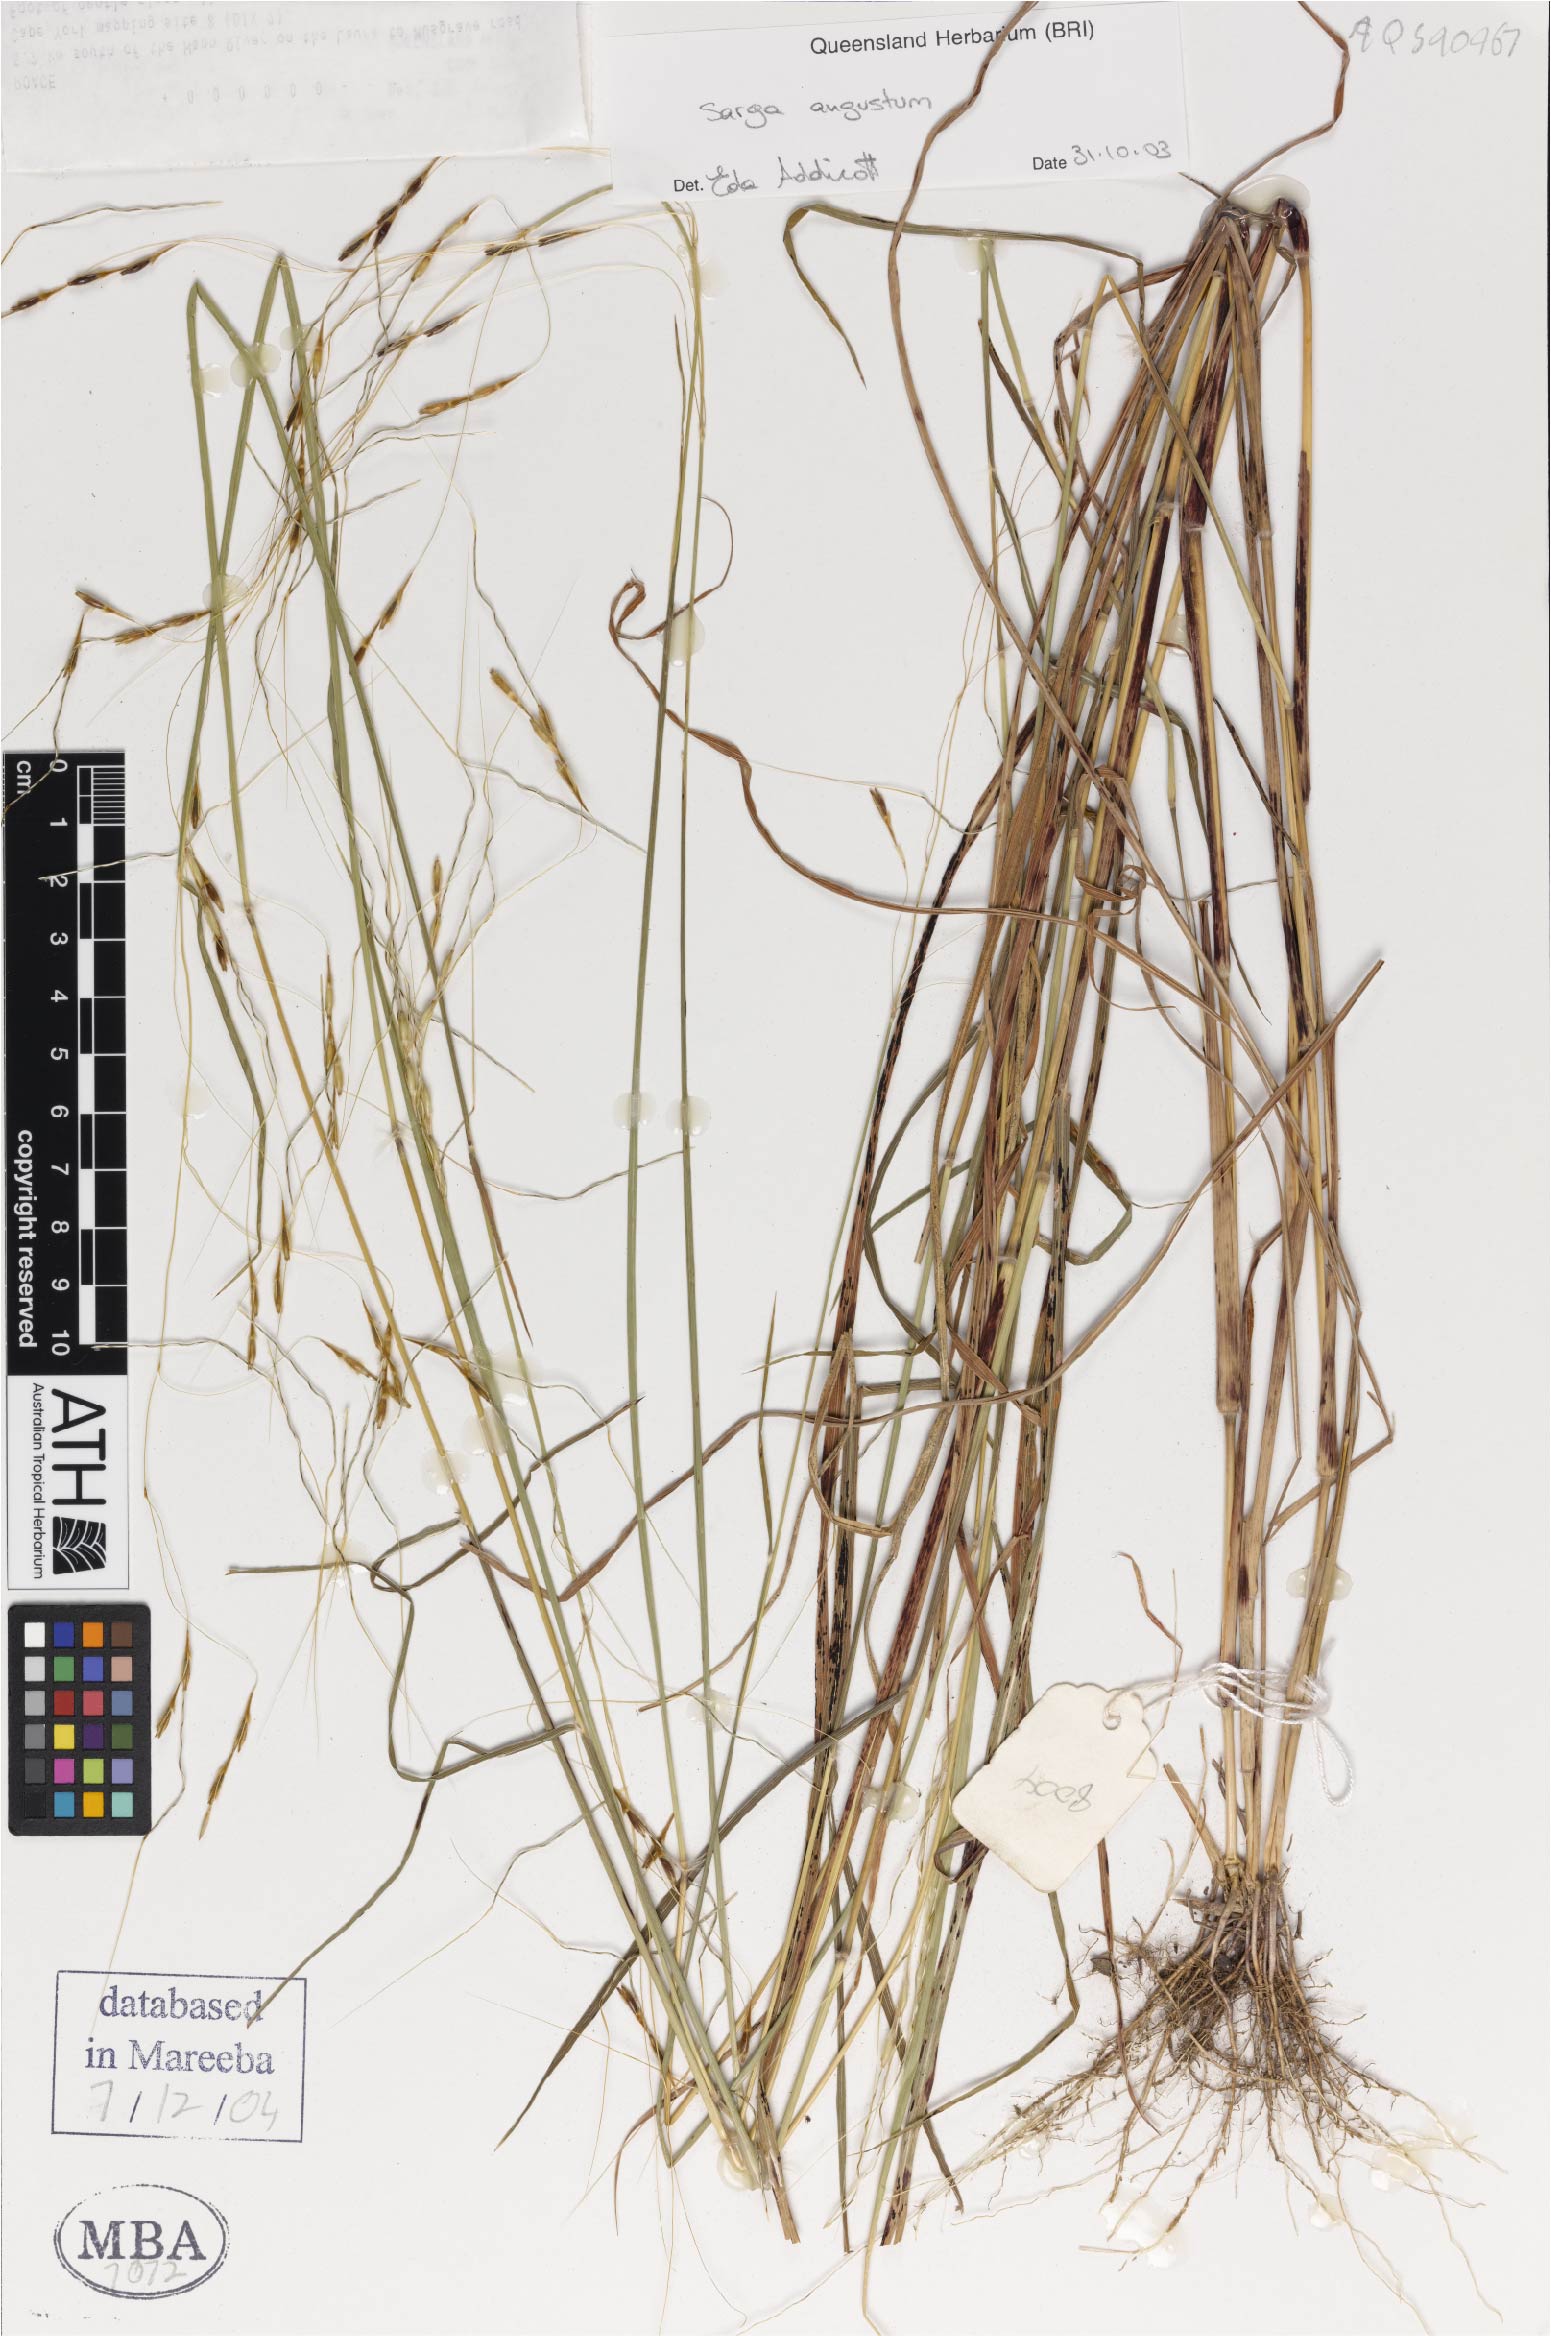 Fig. 1a. Herbarium sheet of Sarga angustum (MBA7072)